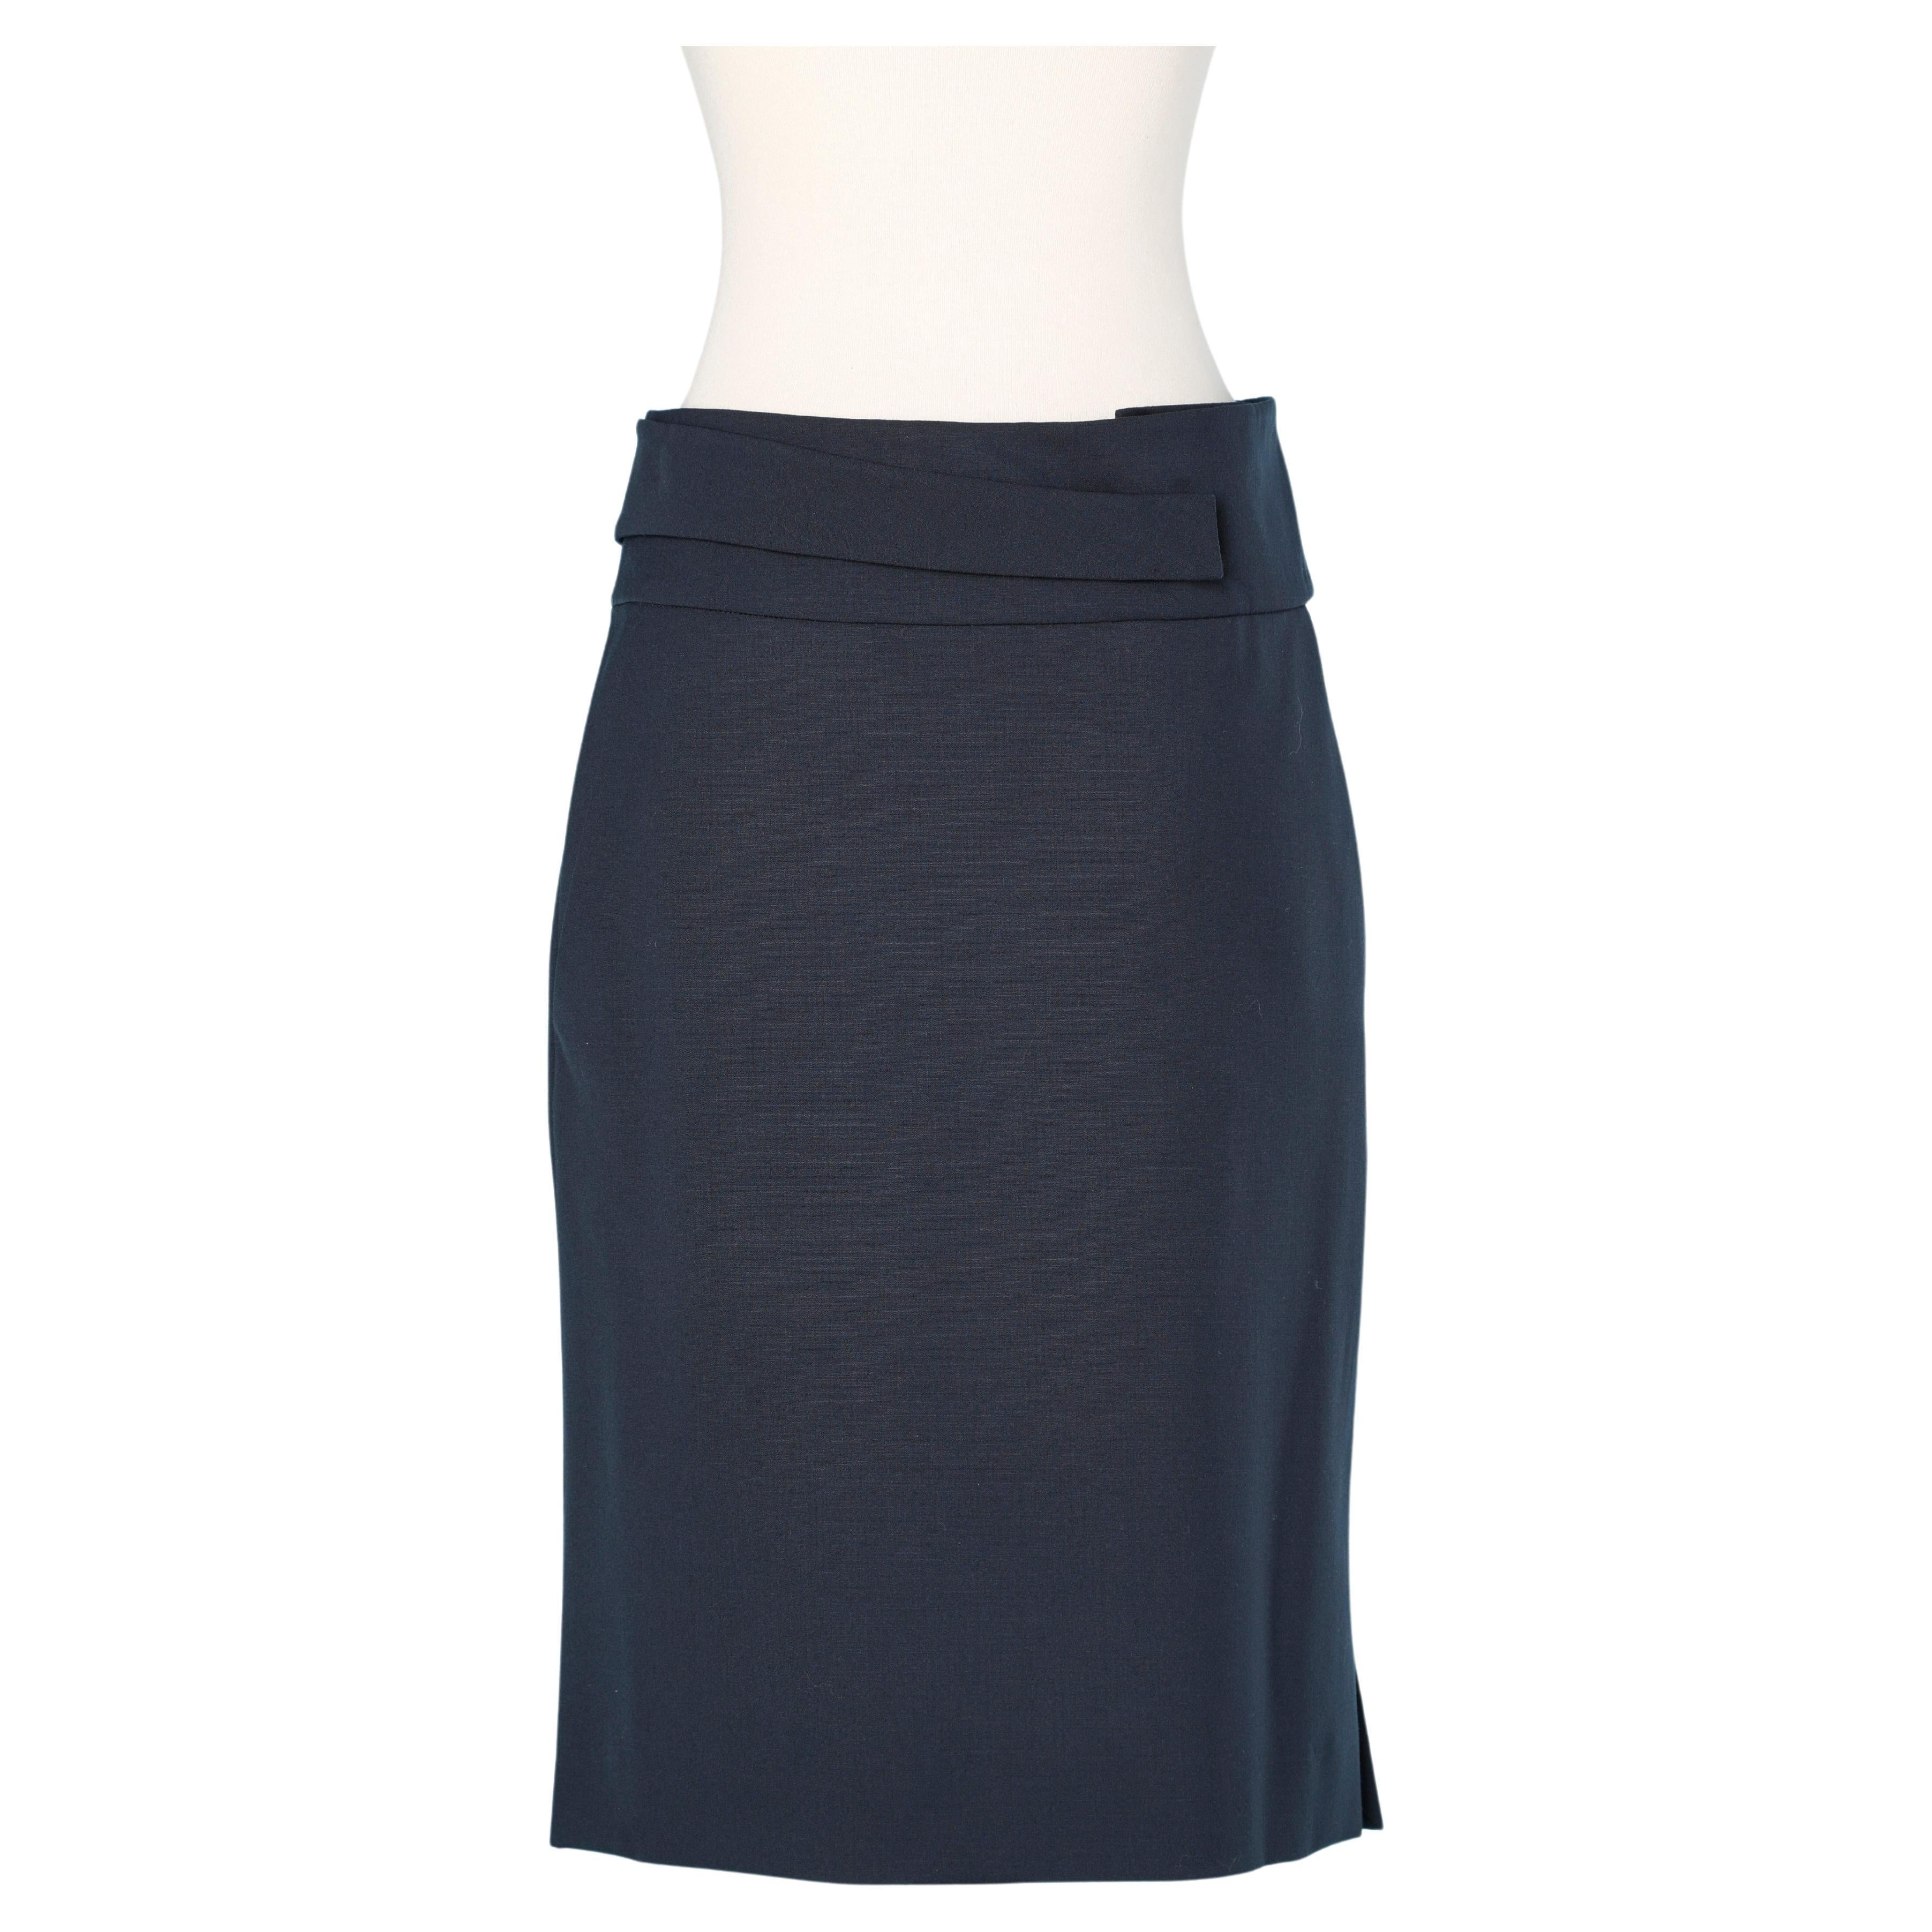 Navy blue thin wool skirt with wrap fabric belt Yves Saint Laurent Rive Gauche 